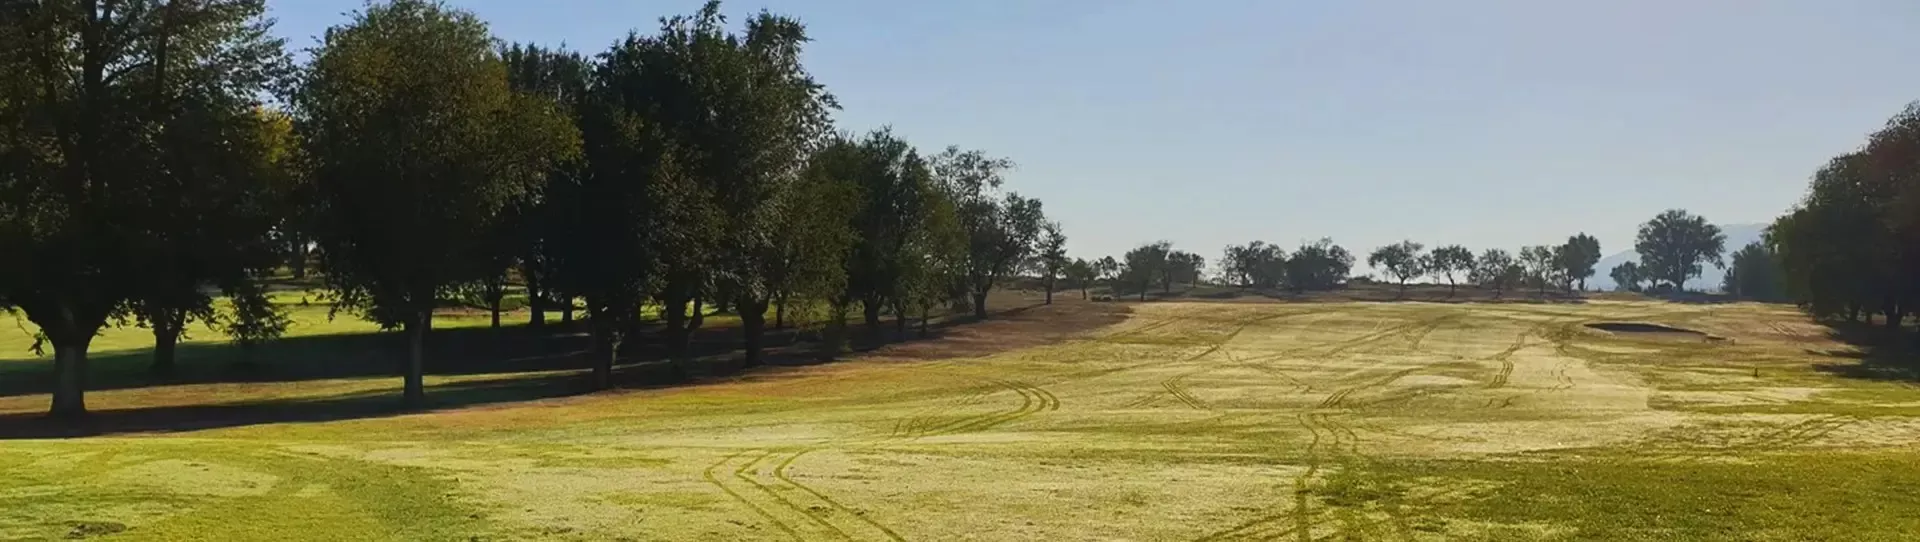 Spain golf courses - La Base Aerea de Torrejón Golf Course - Photo 1